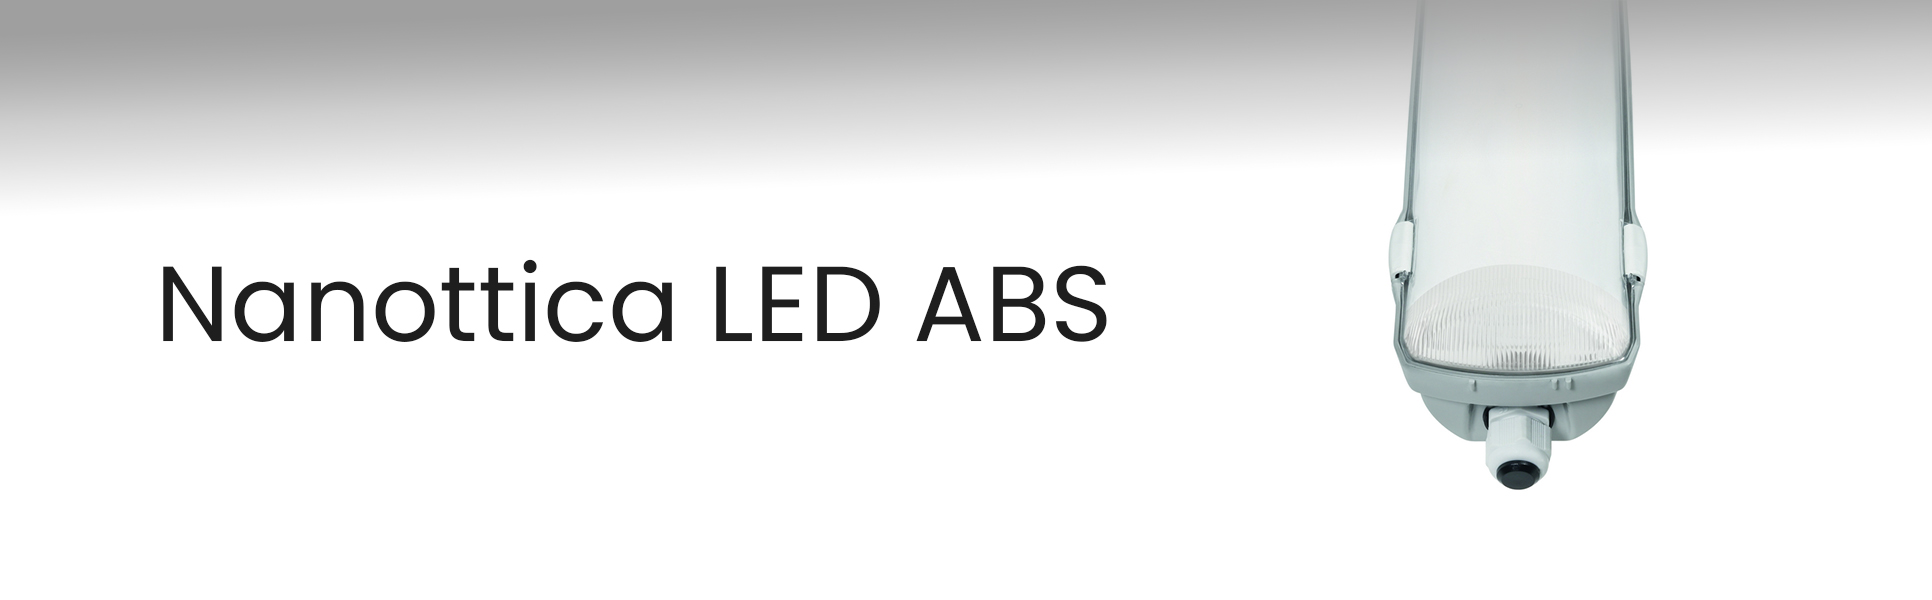 Nanottica LED ABS